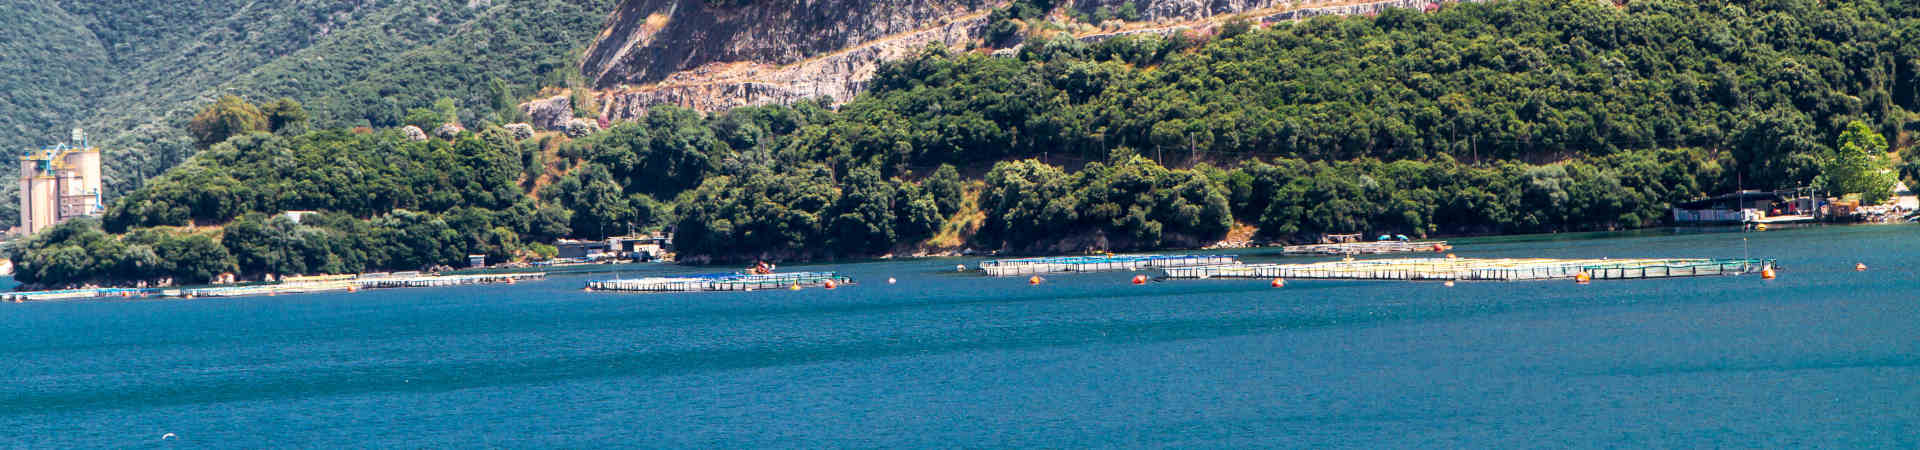 Imagen recurso del puerto de destino Igoumenitsa para la ruta en ferry Brindisi - Igoumenitsa